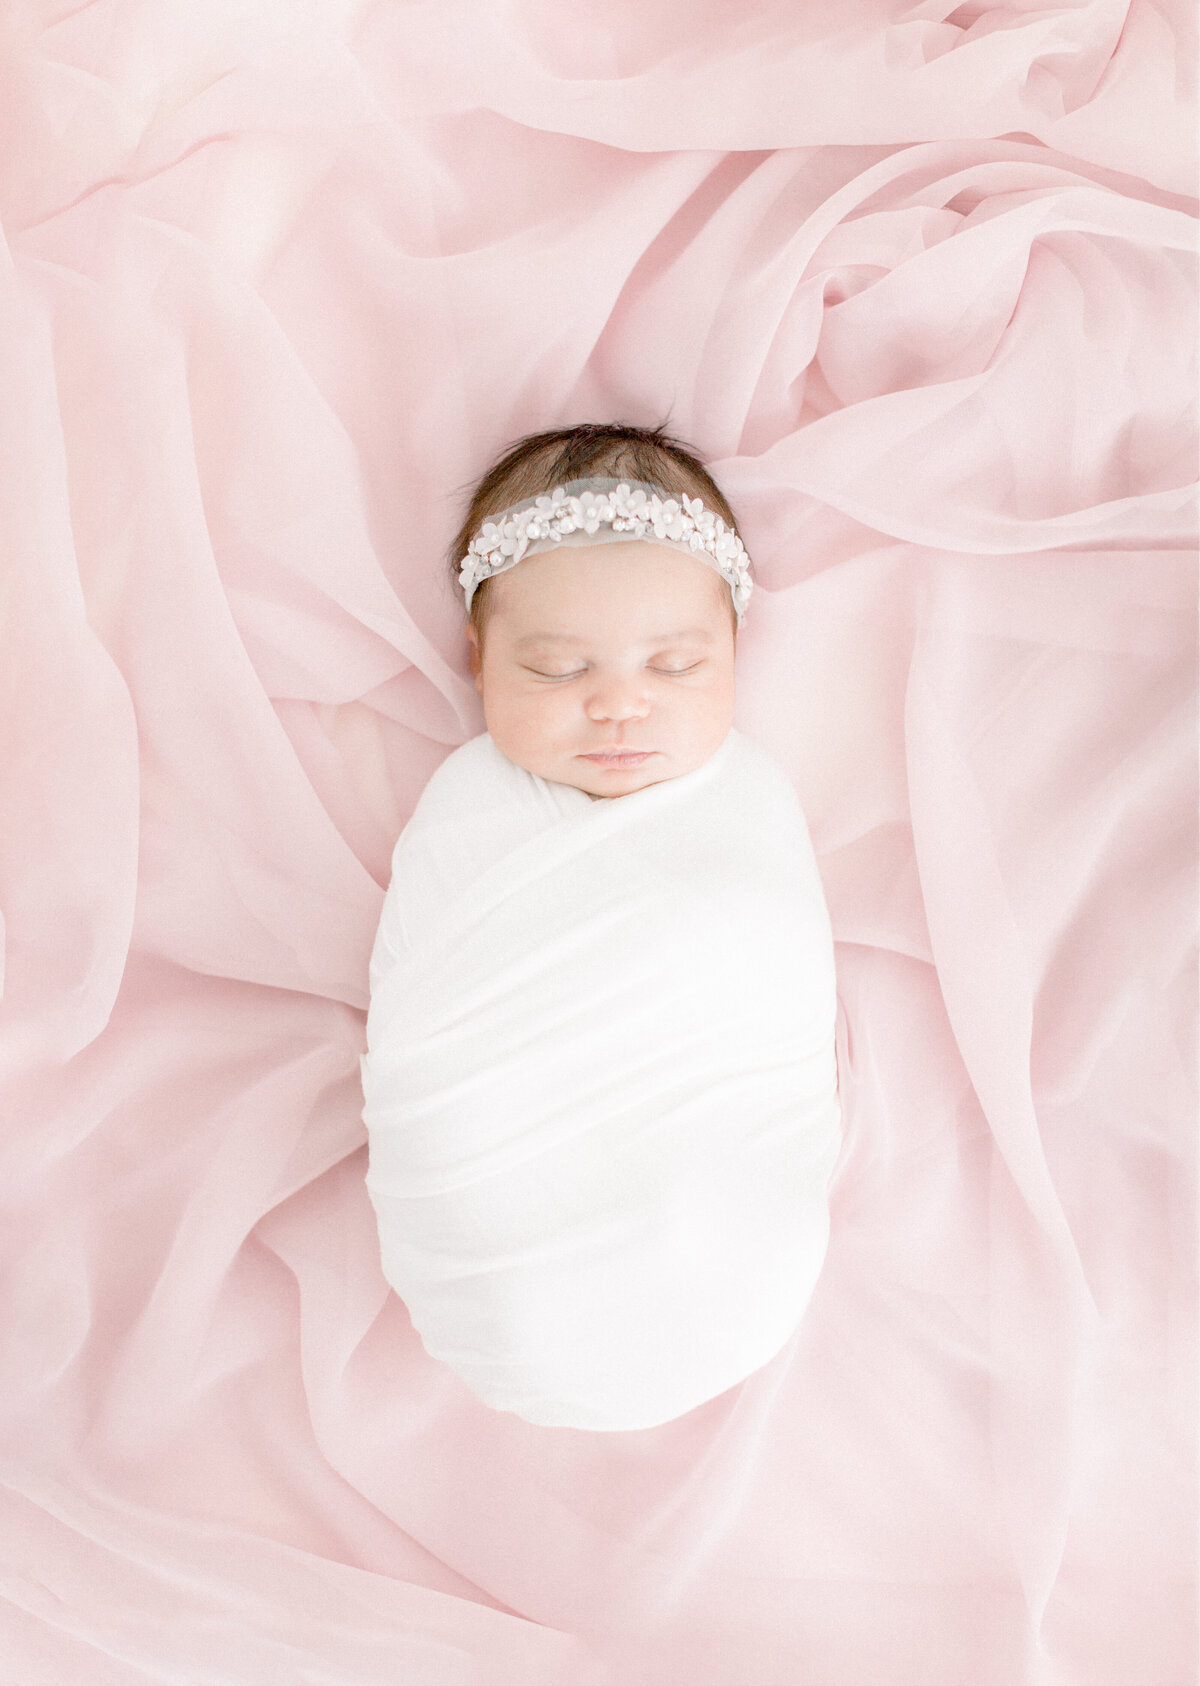 Portrait of a newborn baby wrapped and laying on blush chiffon fabric